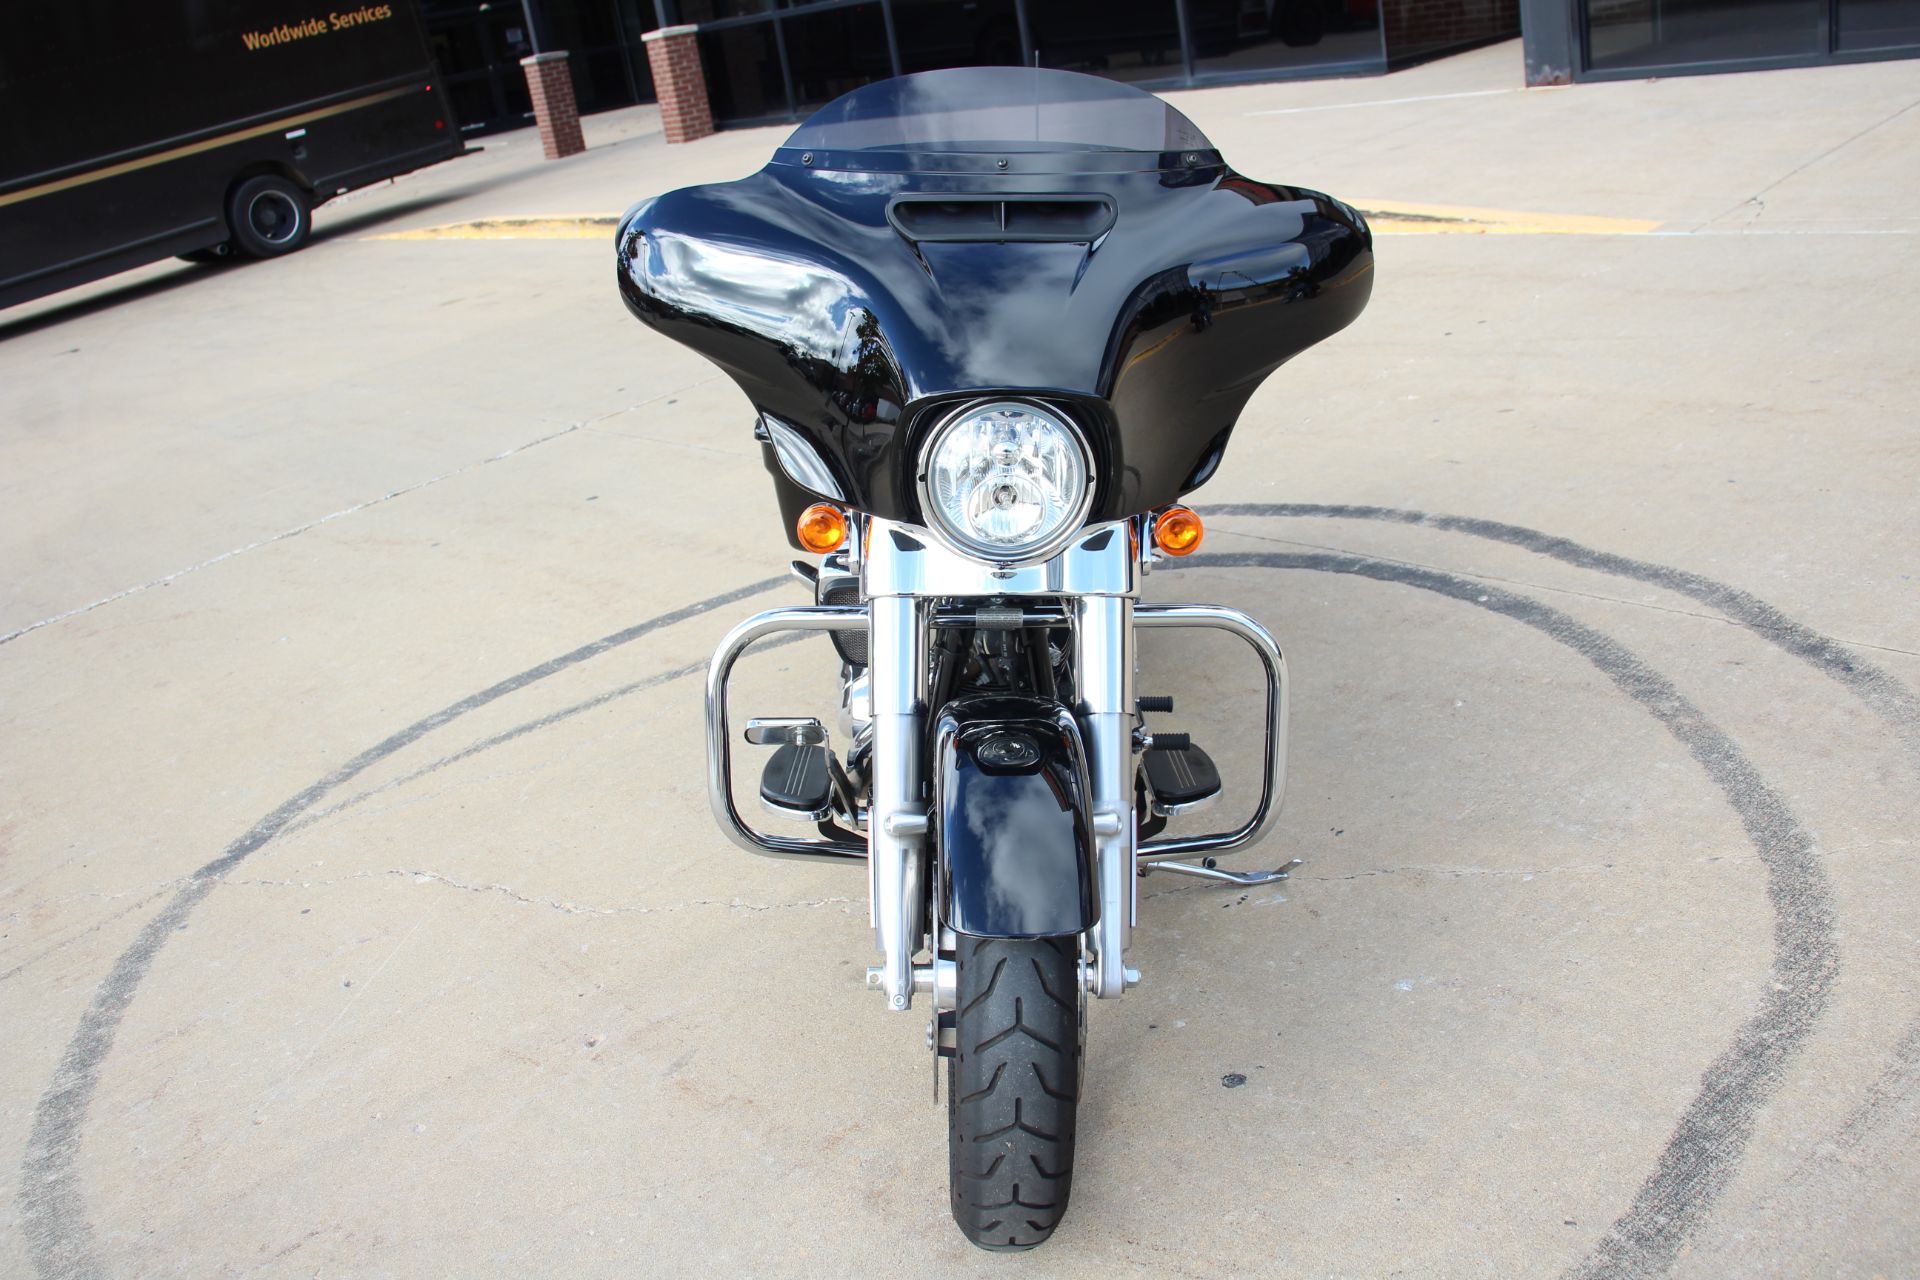 2019 Harley-Davidson Street Glide® in Flint, Michigan - Photo 3